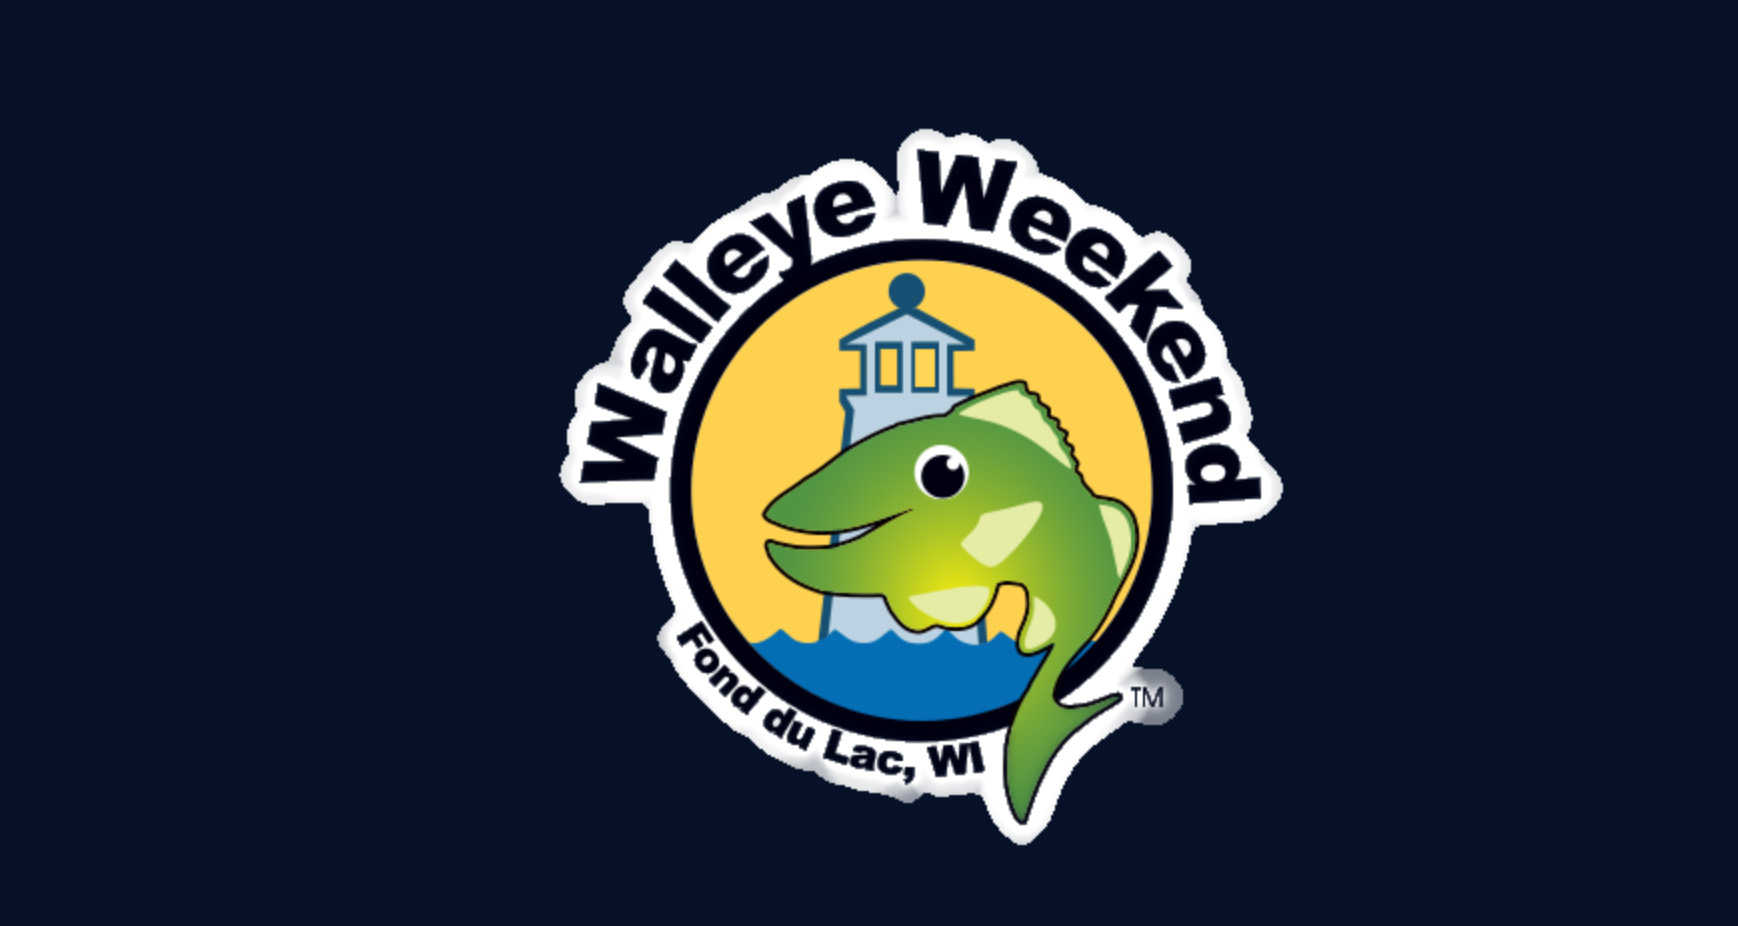 Explore Lake Winnebago - Celebrating Walleye Weekend: A Guide to the Festivities